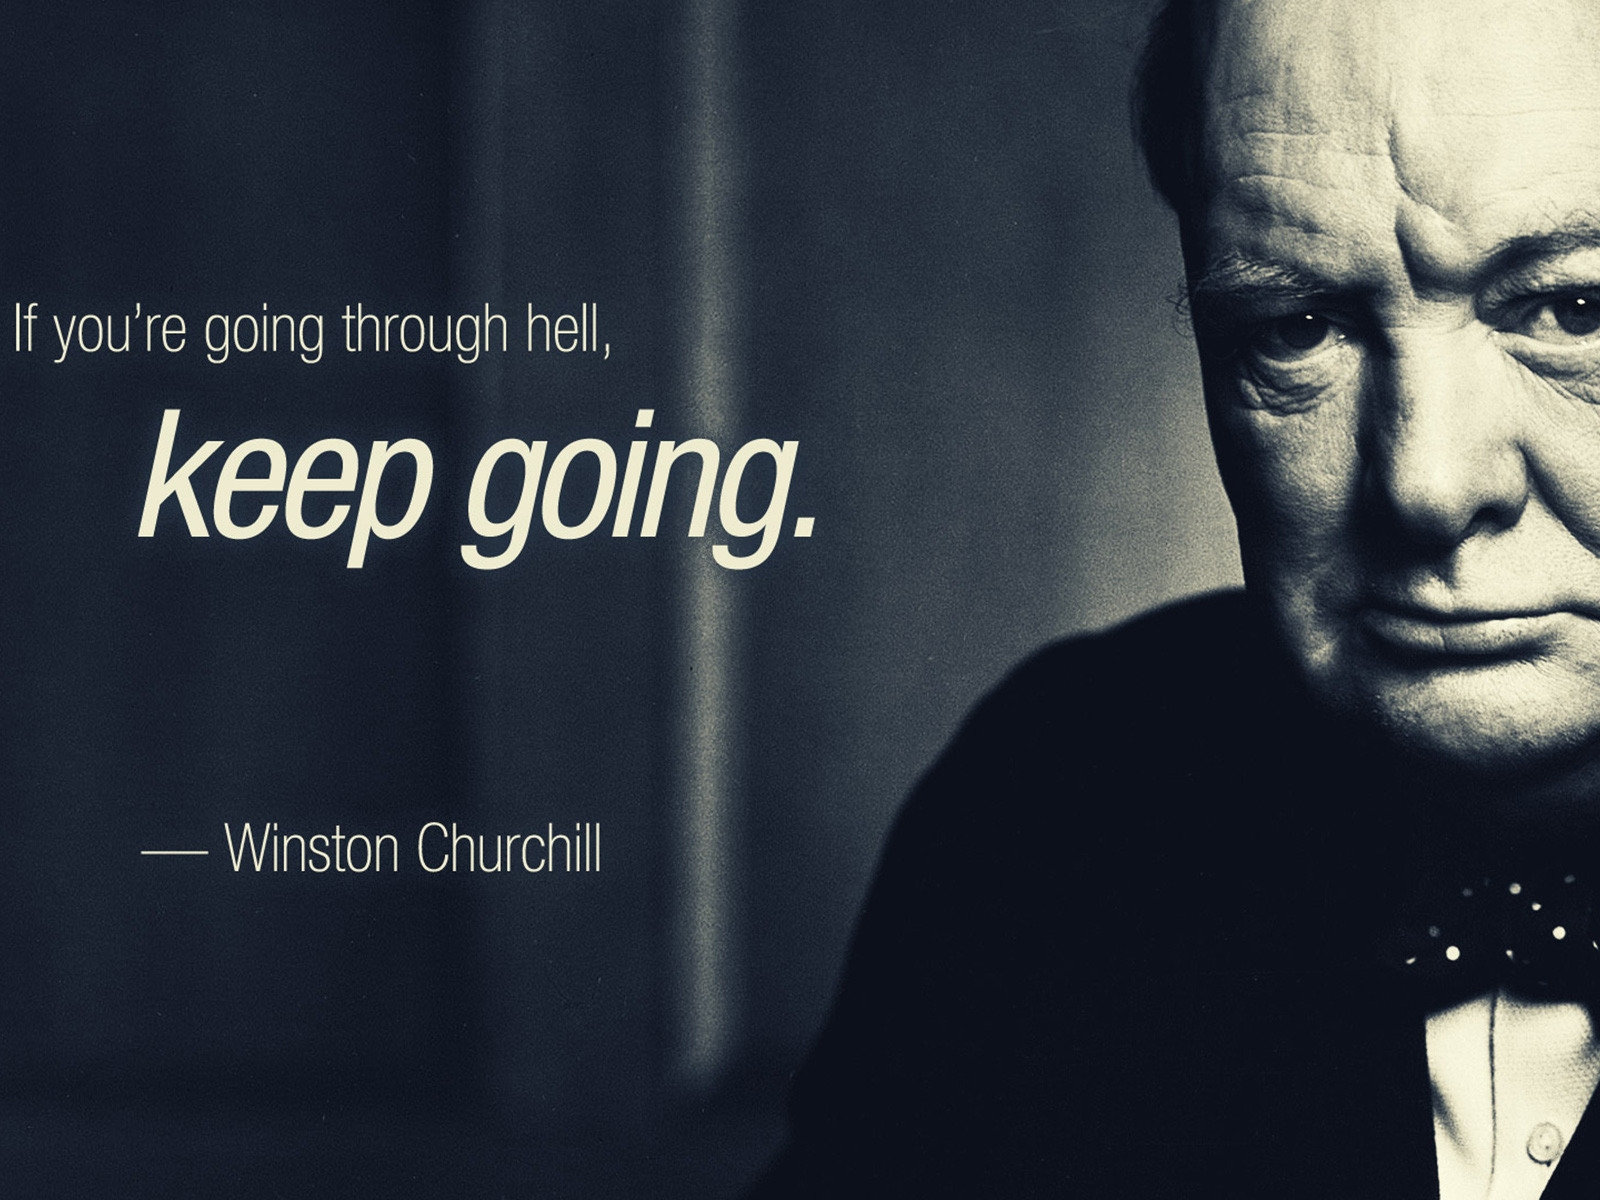 Winston Churchill Quote for 1600 x 1200 resolution